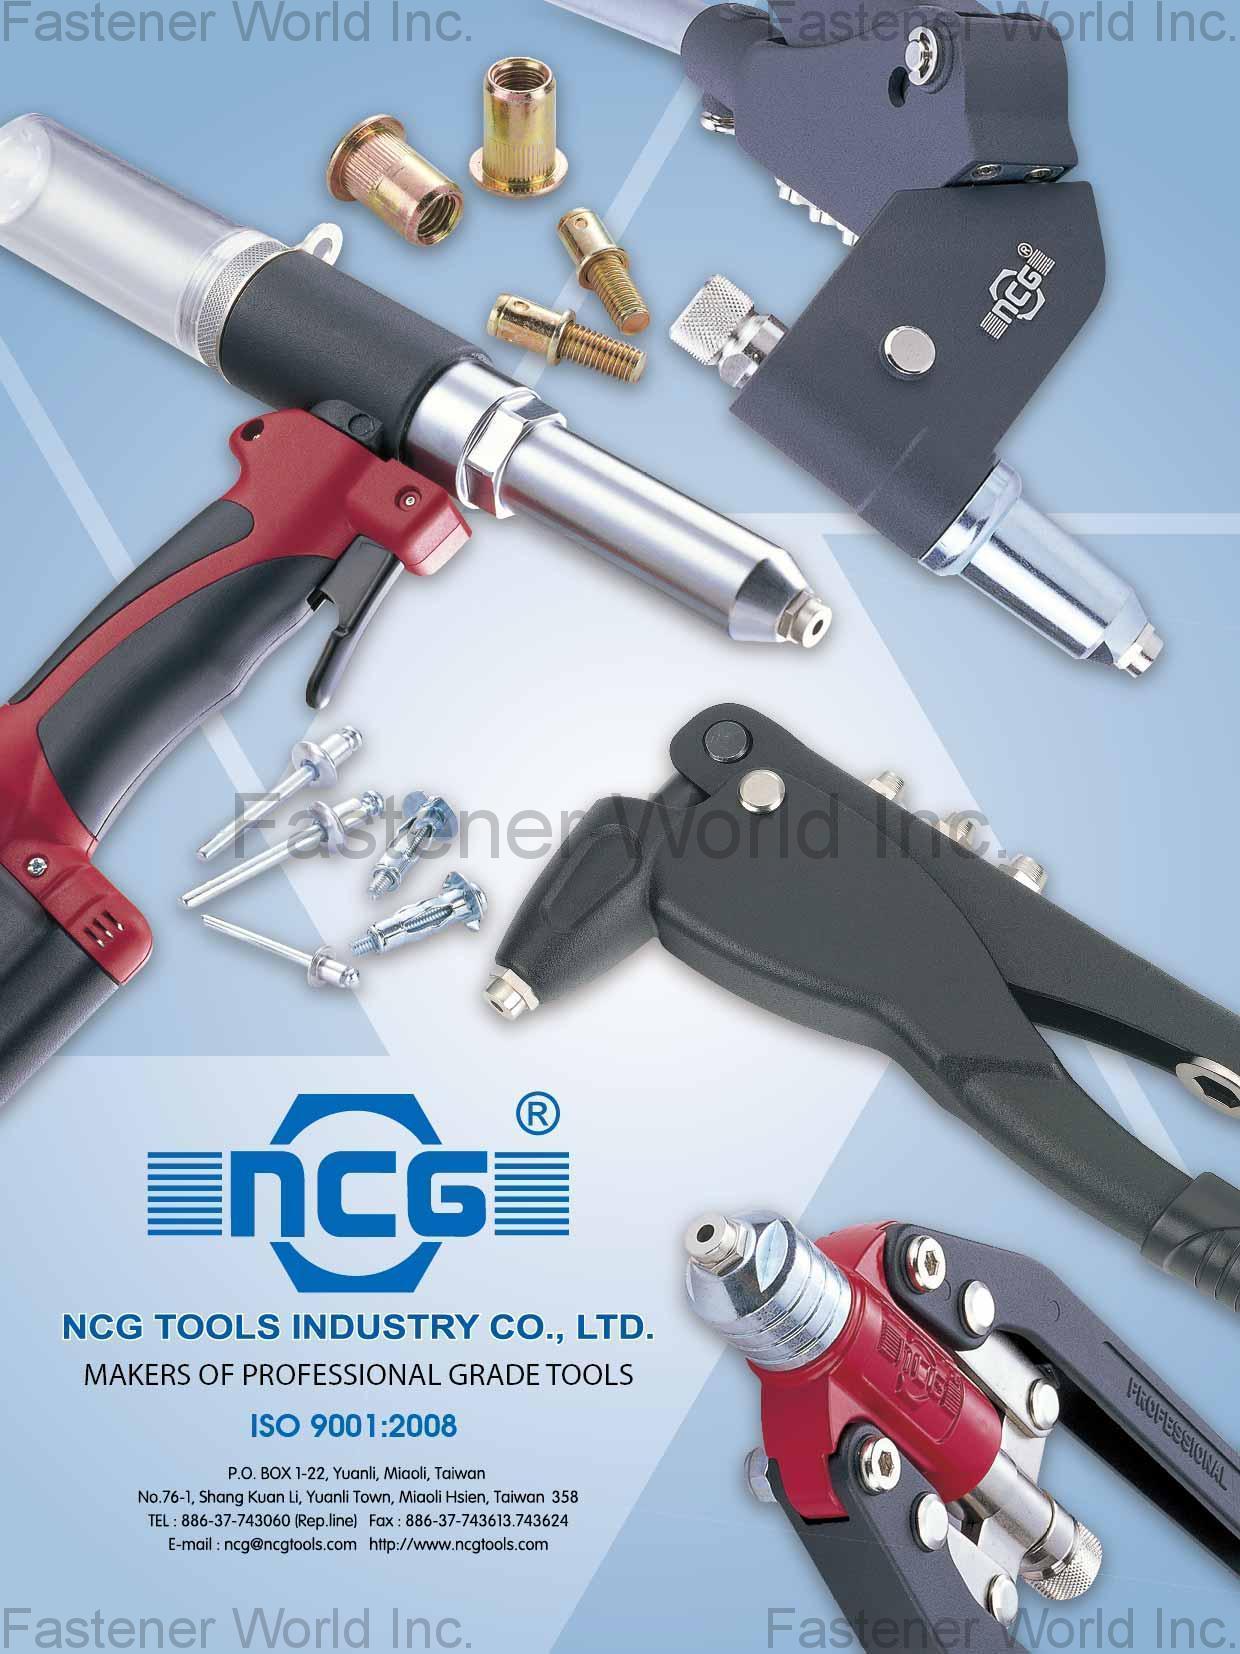 NCG TOOLS INDUSTRY CO., LTD.  , Manual riveters, rivet nut riveting tools , Rivet Nut Tools